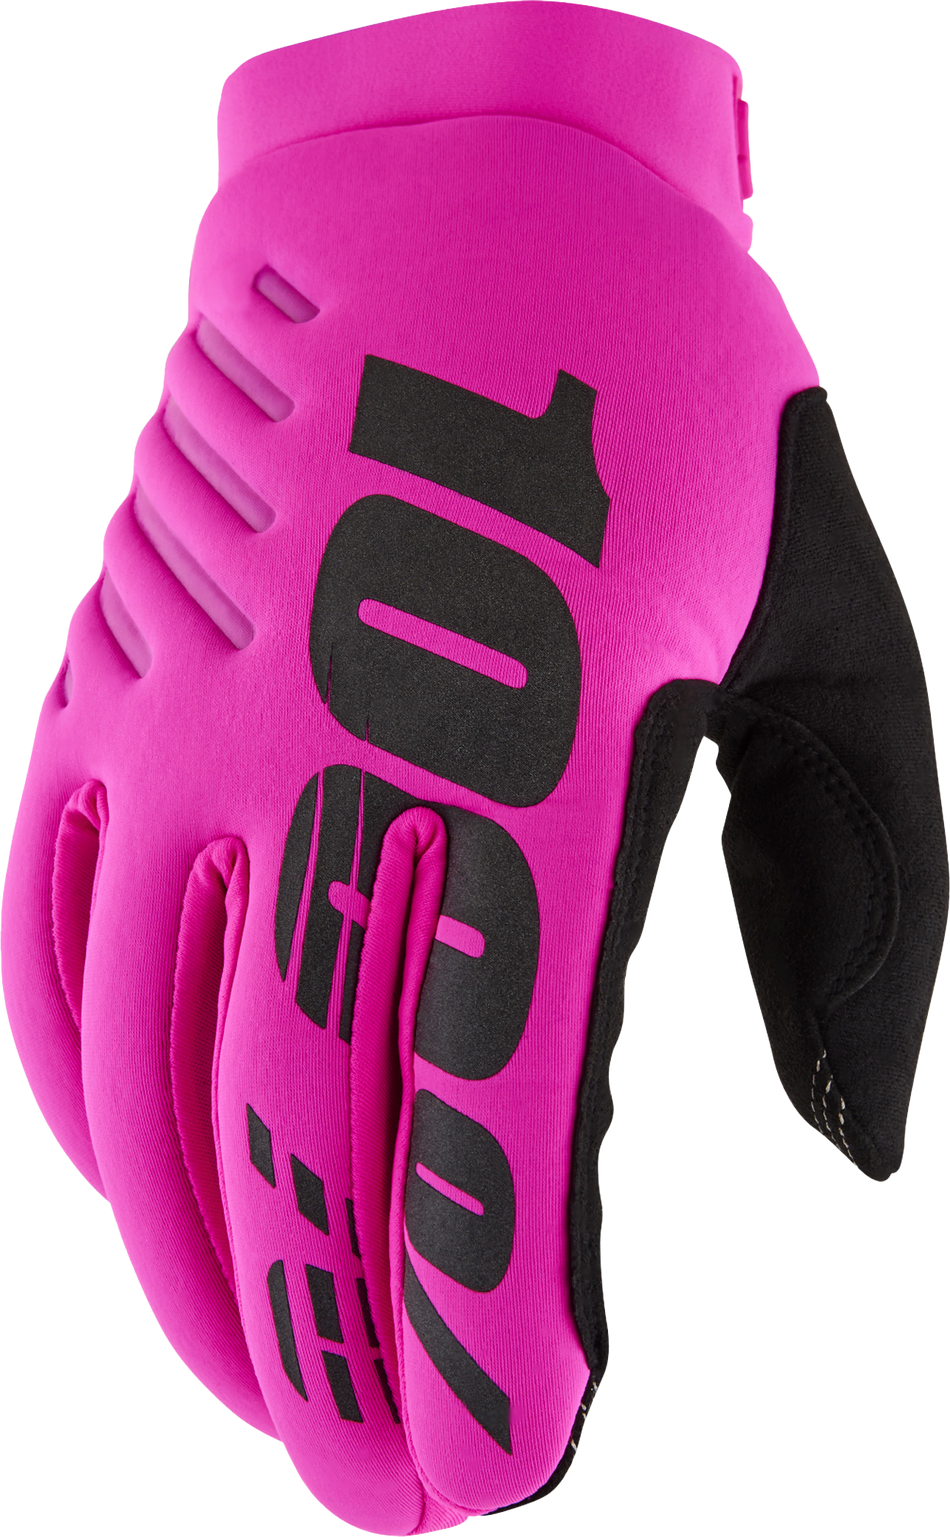 100% Brisker Women's Gloves Neon Pink/Black Lg 10005-00008